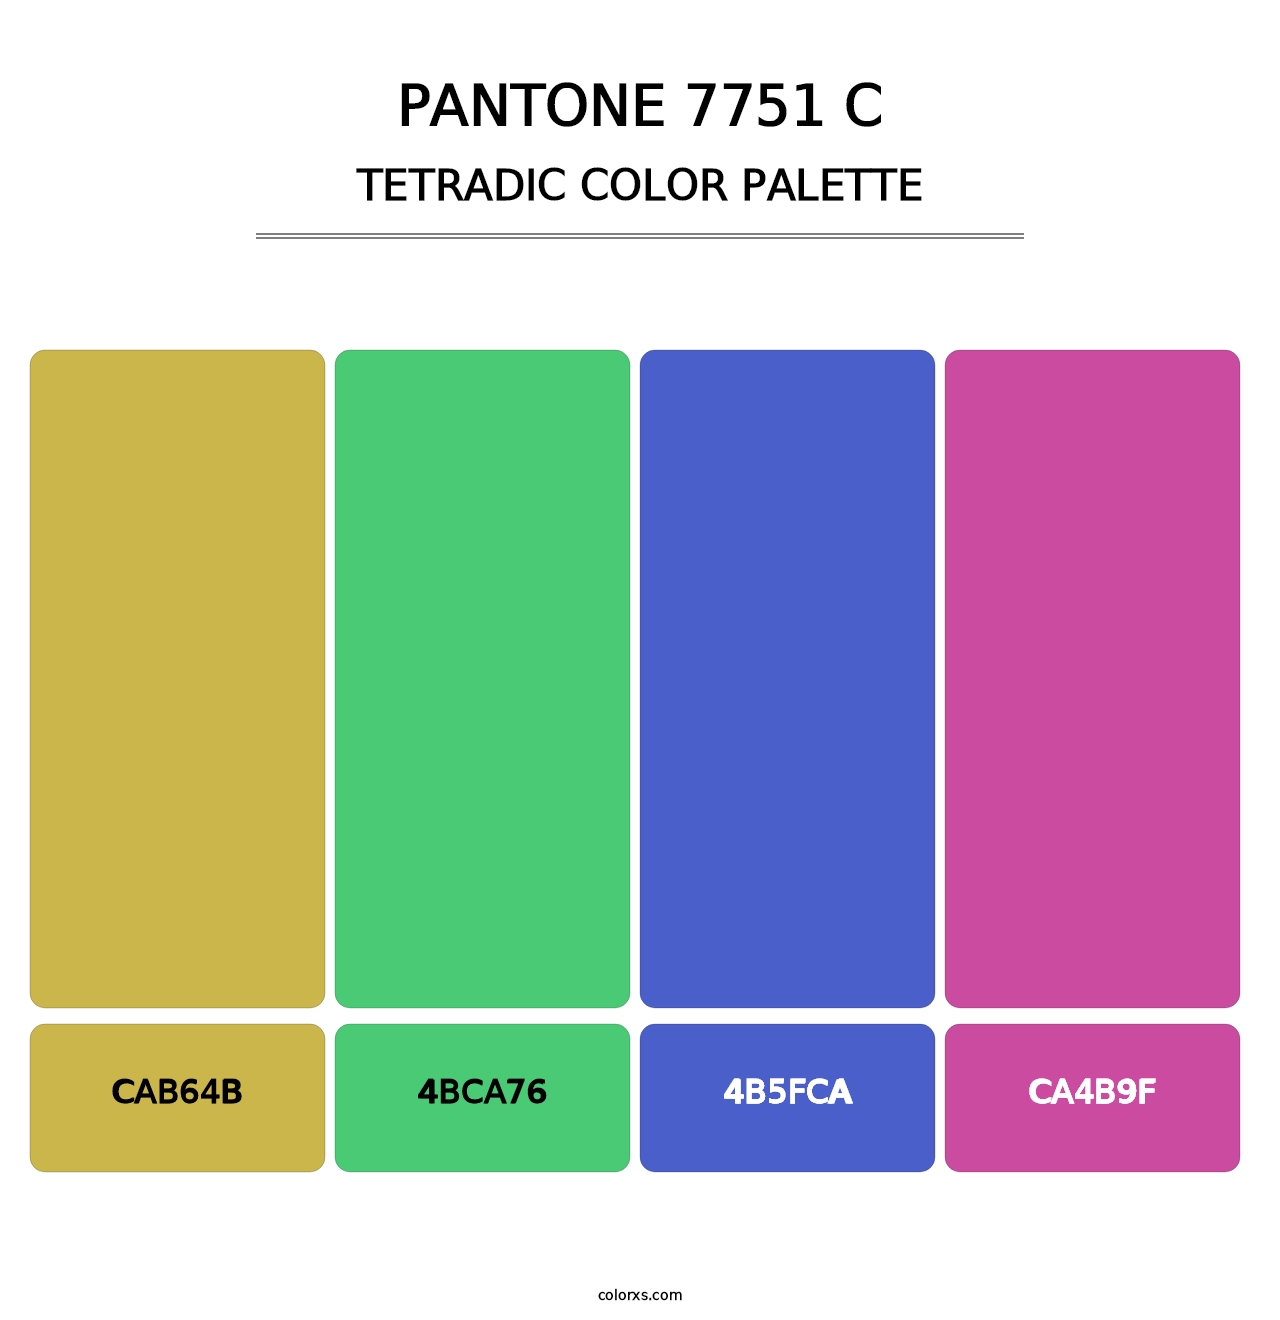 PANTONE 7751 C - Tetradic Color Palette